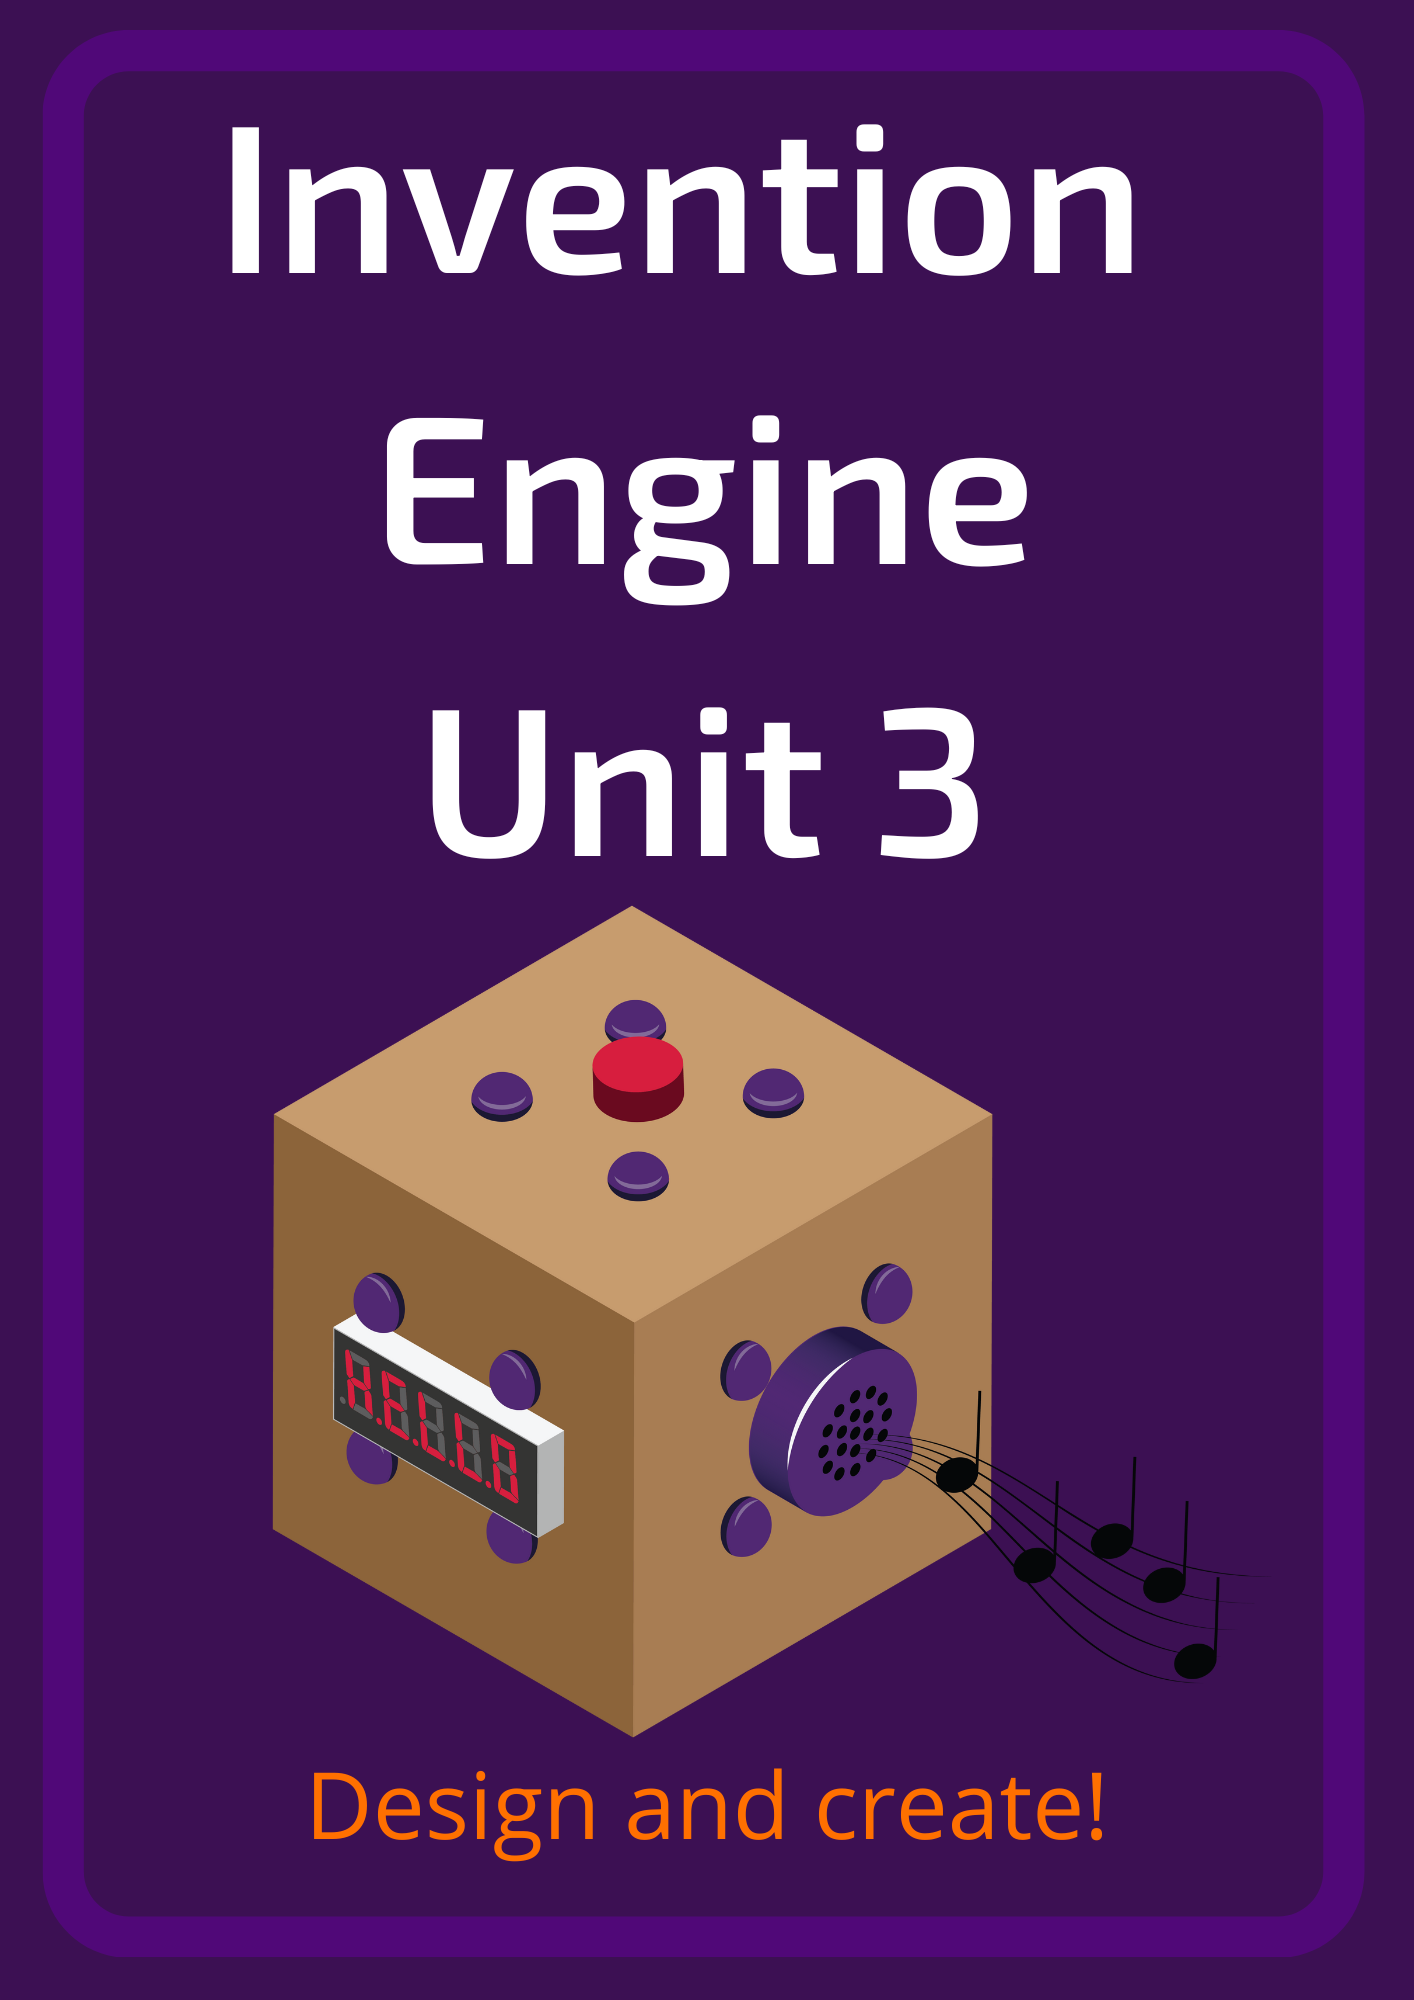 Invention Engine unit 3 image